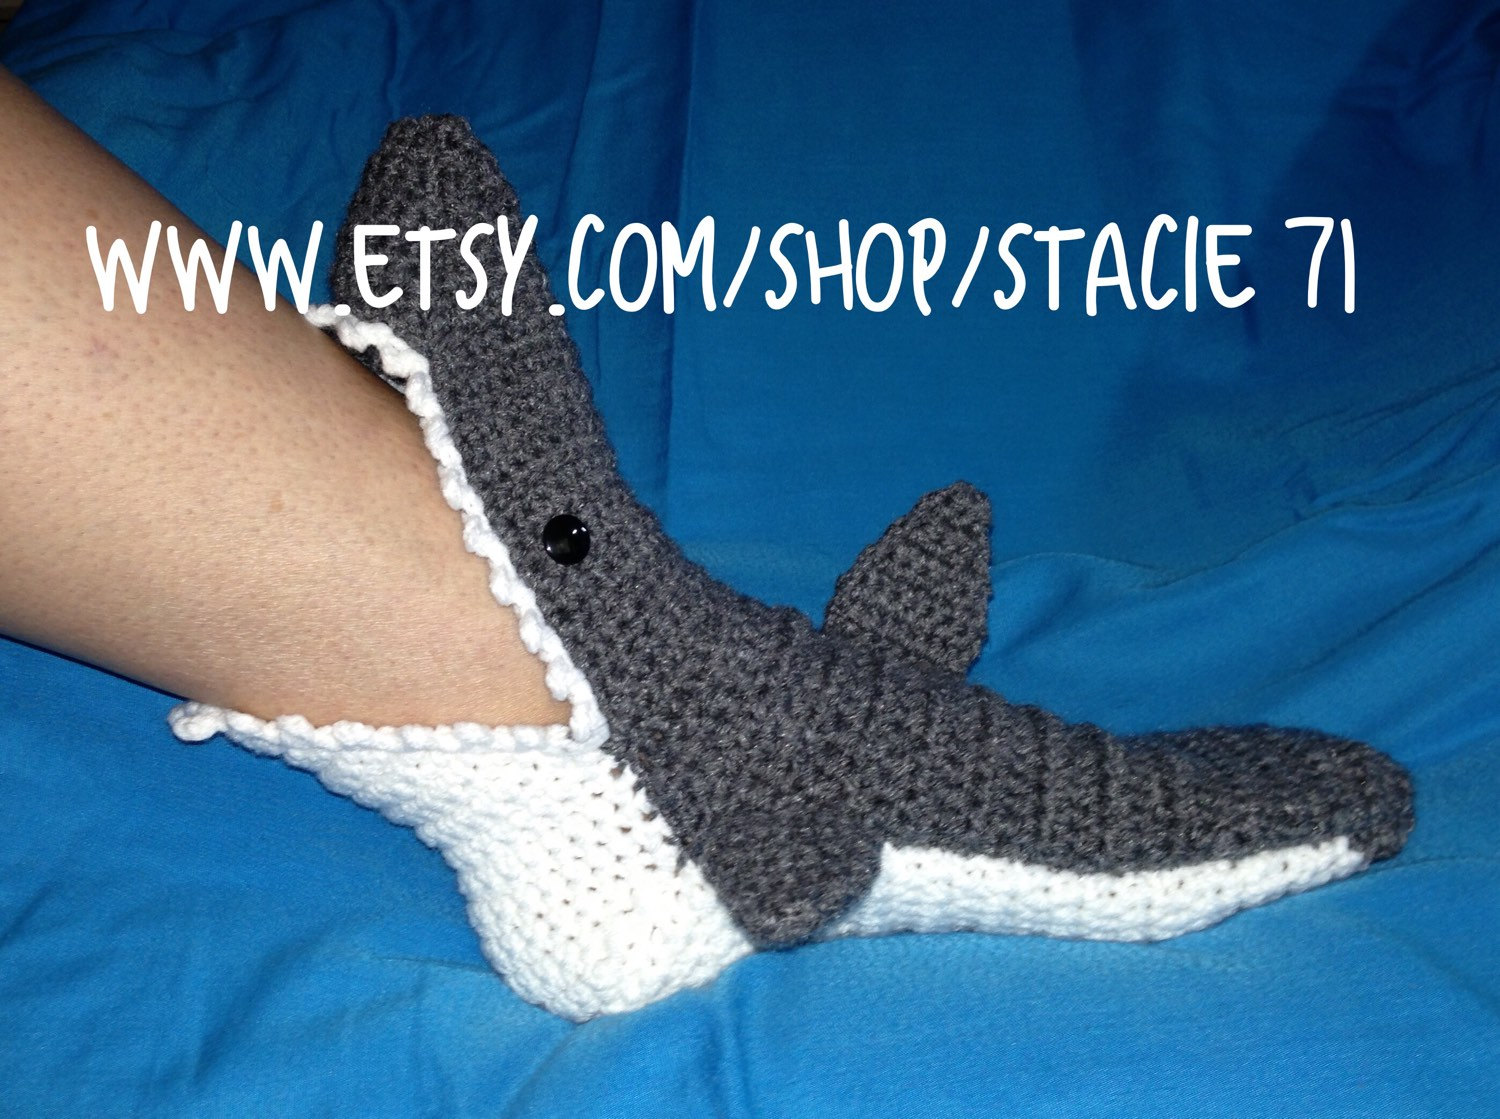 Adult & Child Sizes Fabulous Novelty Unisex Hand Crocheted Shark Socks Clothing Gender-Neutral Adult Clothing Socks & Hosiery 